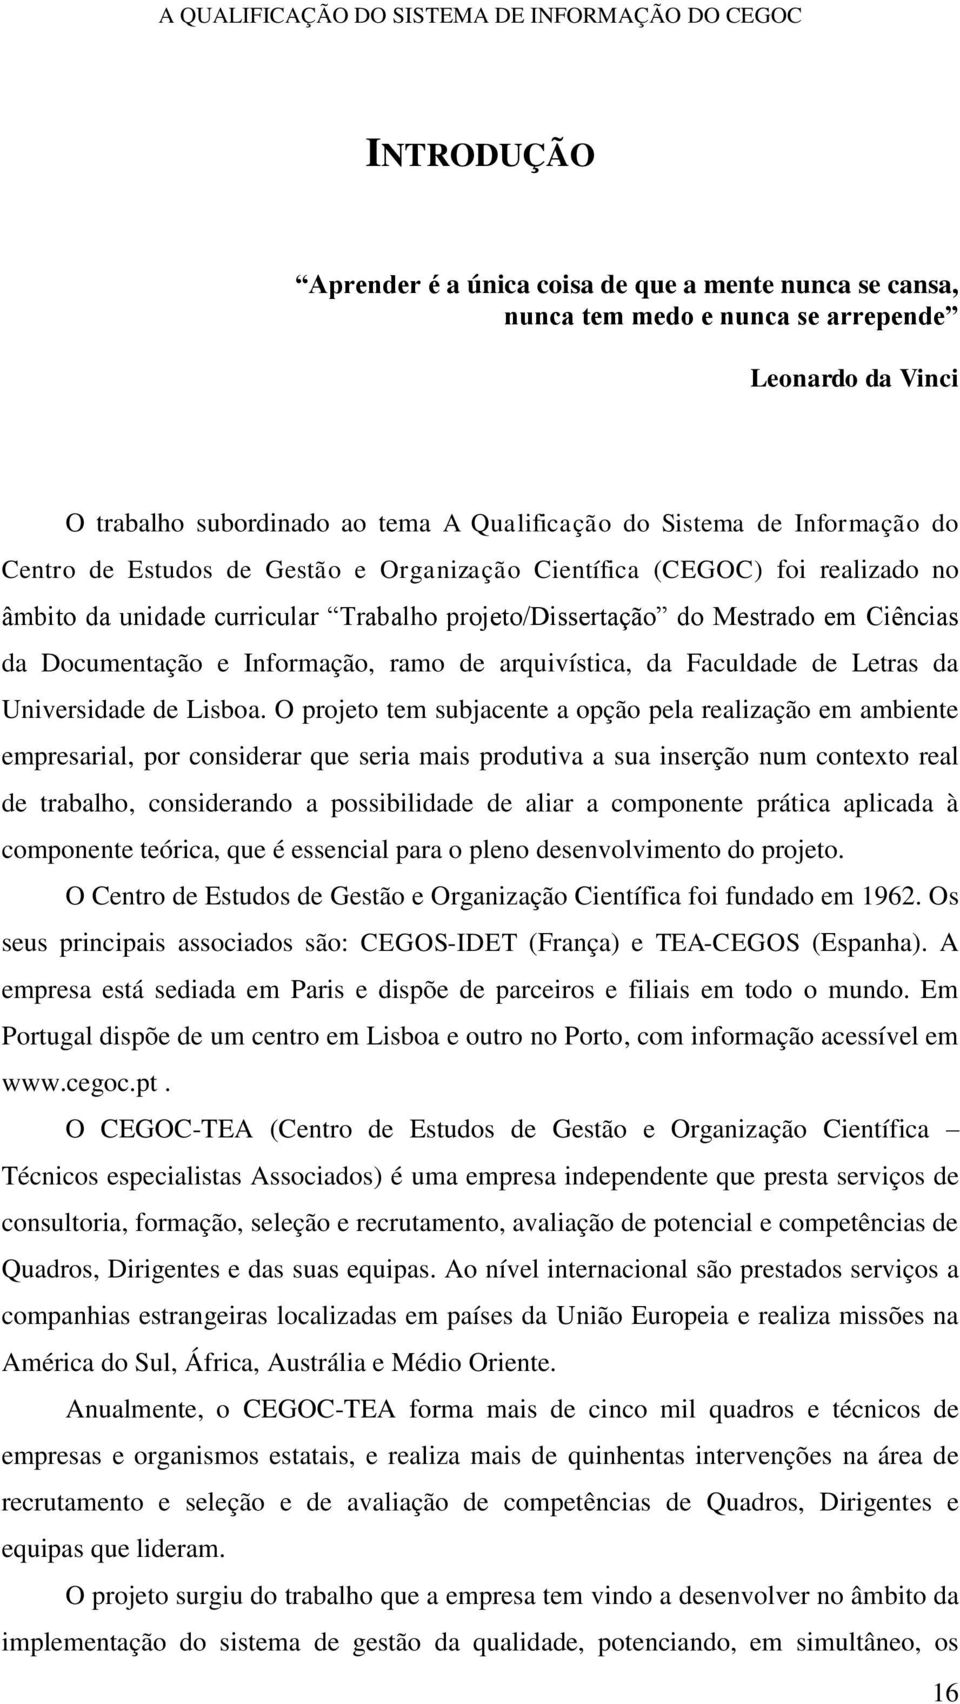 arquivística, da Faculdade de Letras da Universidade de Lisboa.